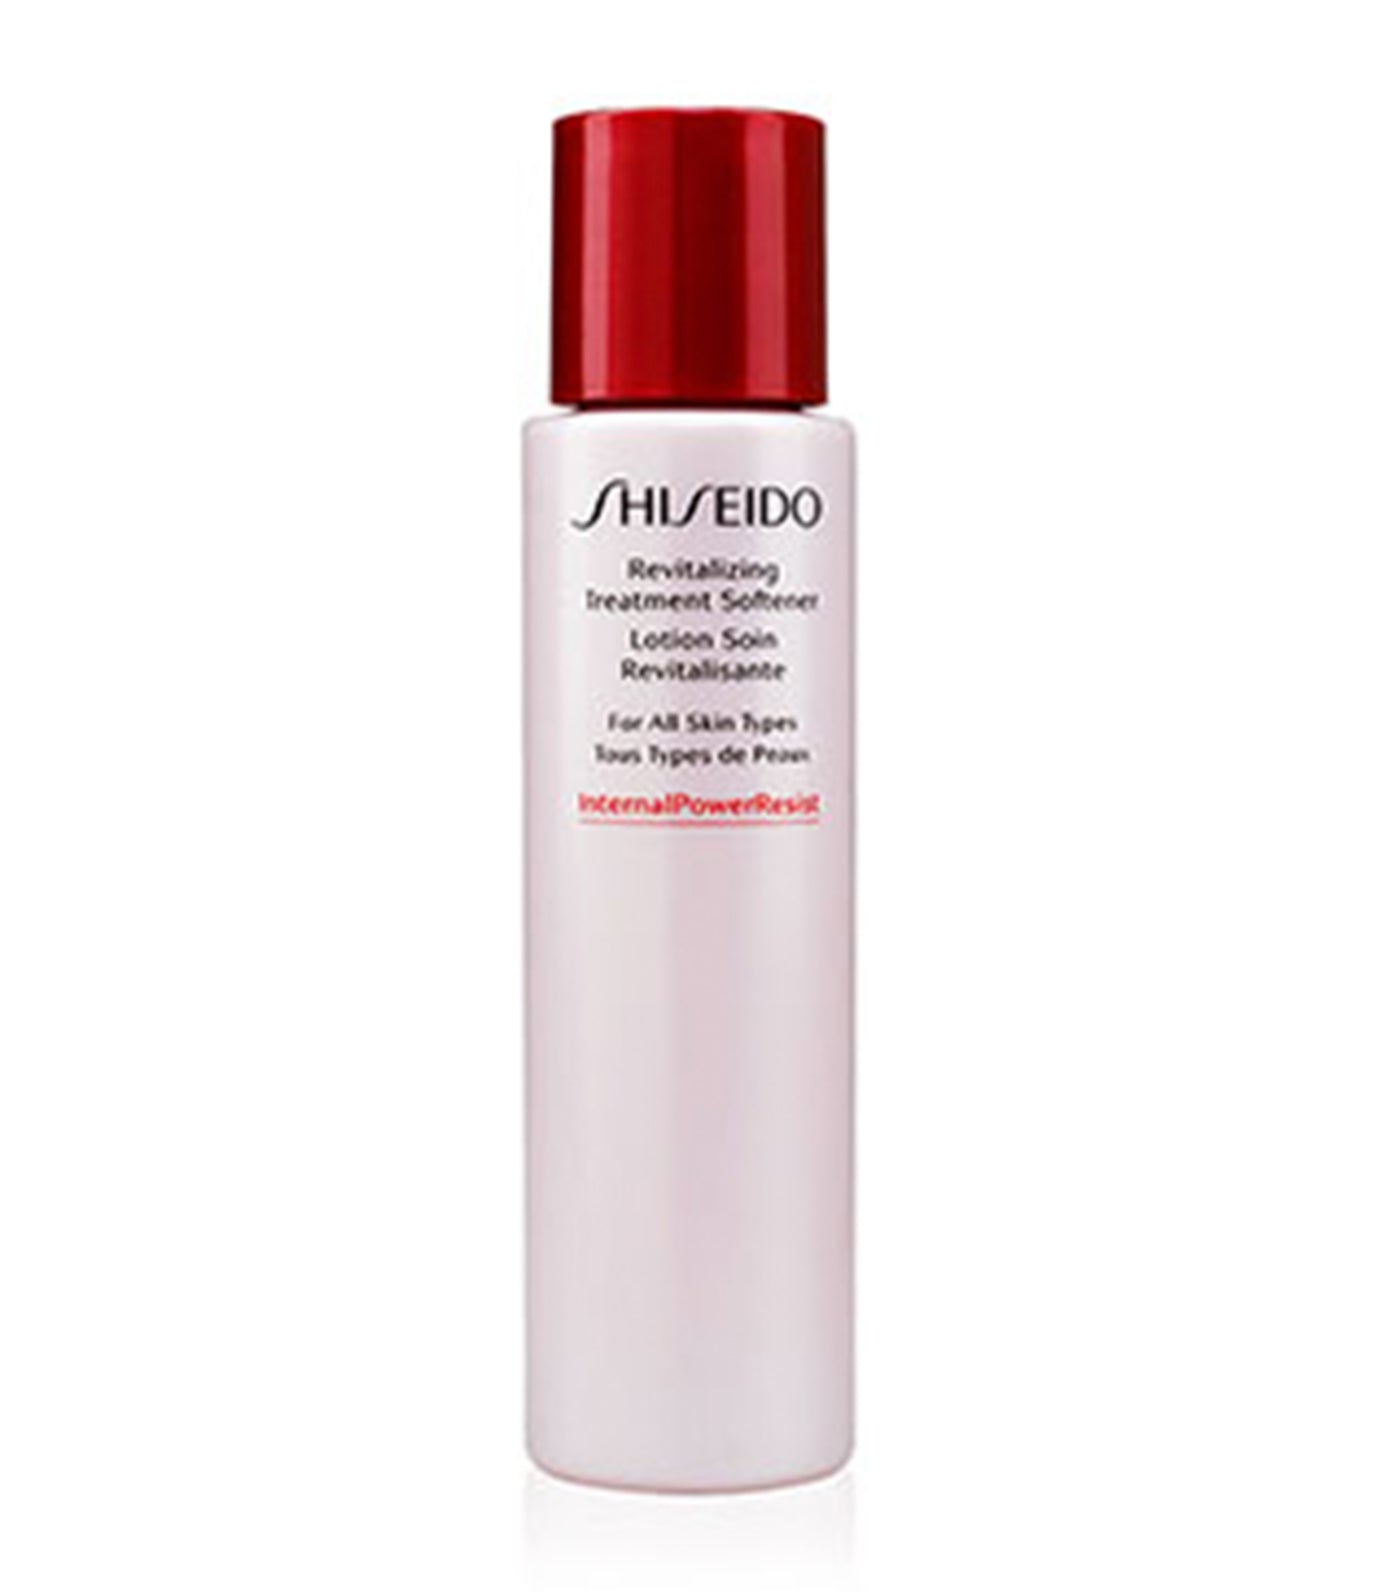 Shiseido Free 75ML Revitalizing Treatment Softener